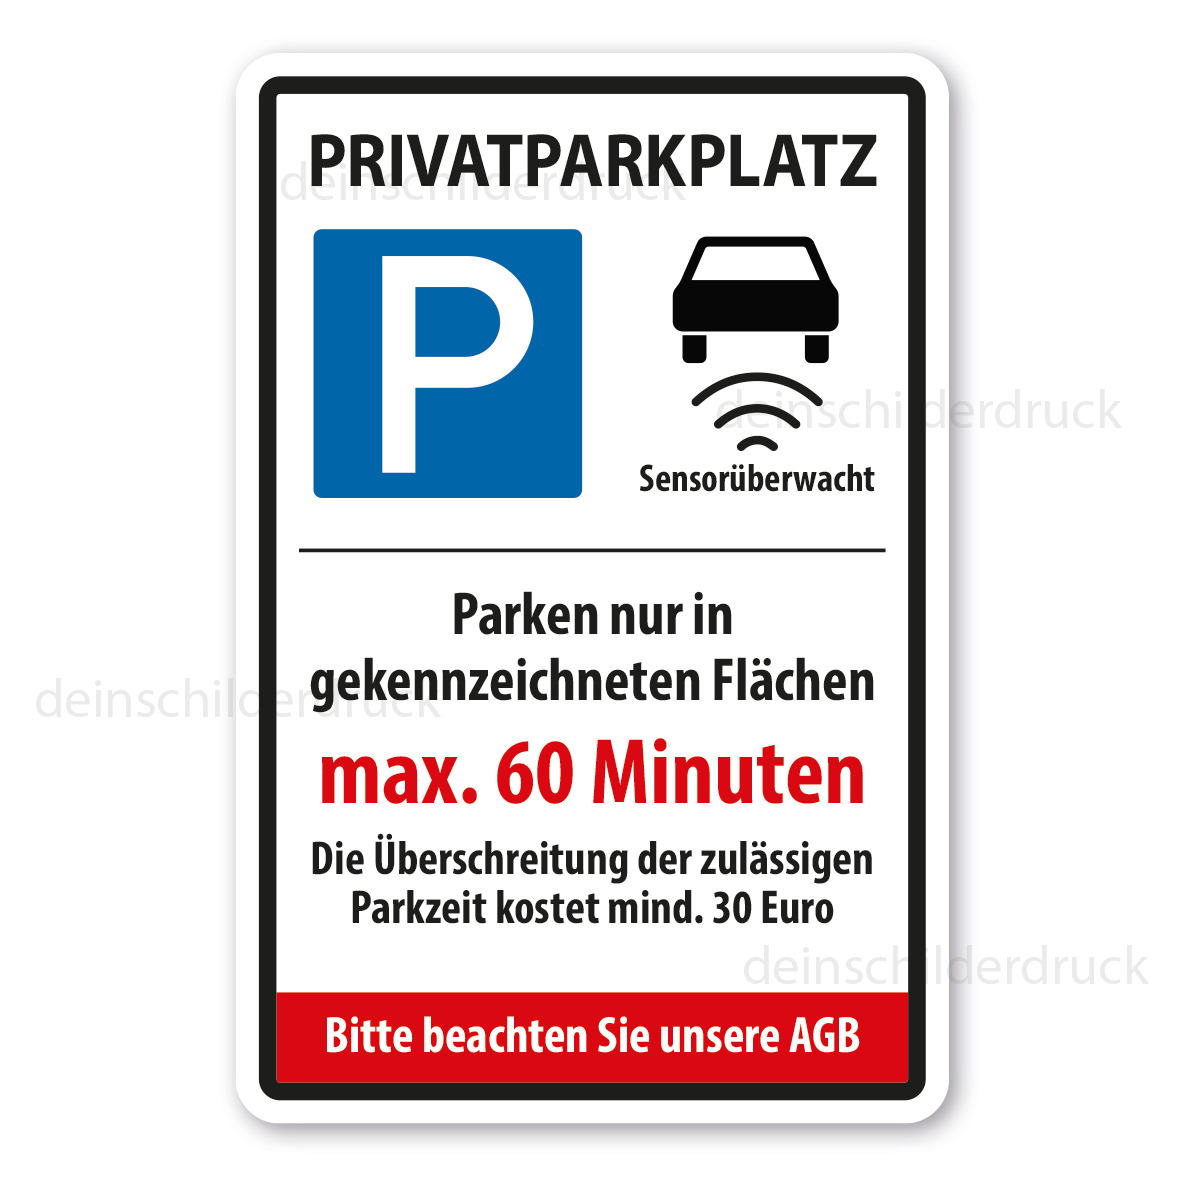 Privatparkplätze: Profi-Parkplatzwächter dürfen Parksünder